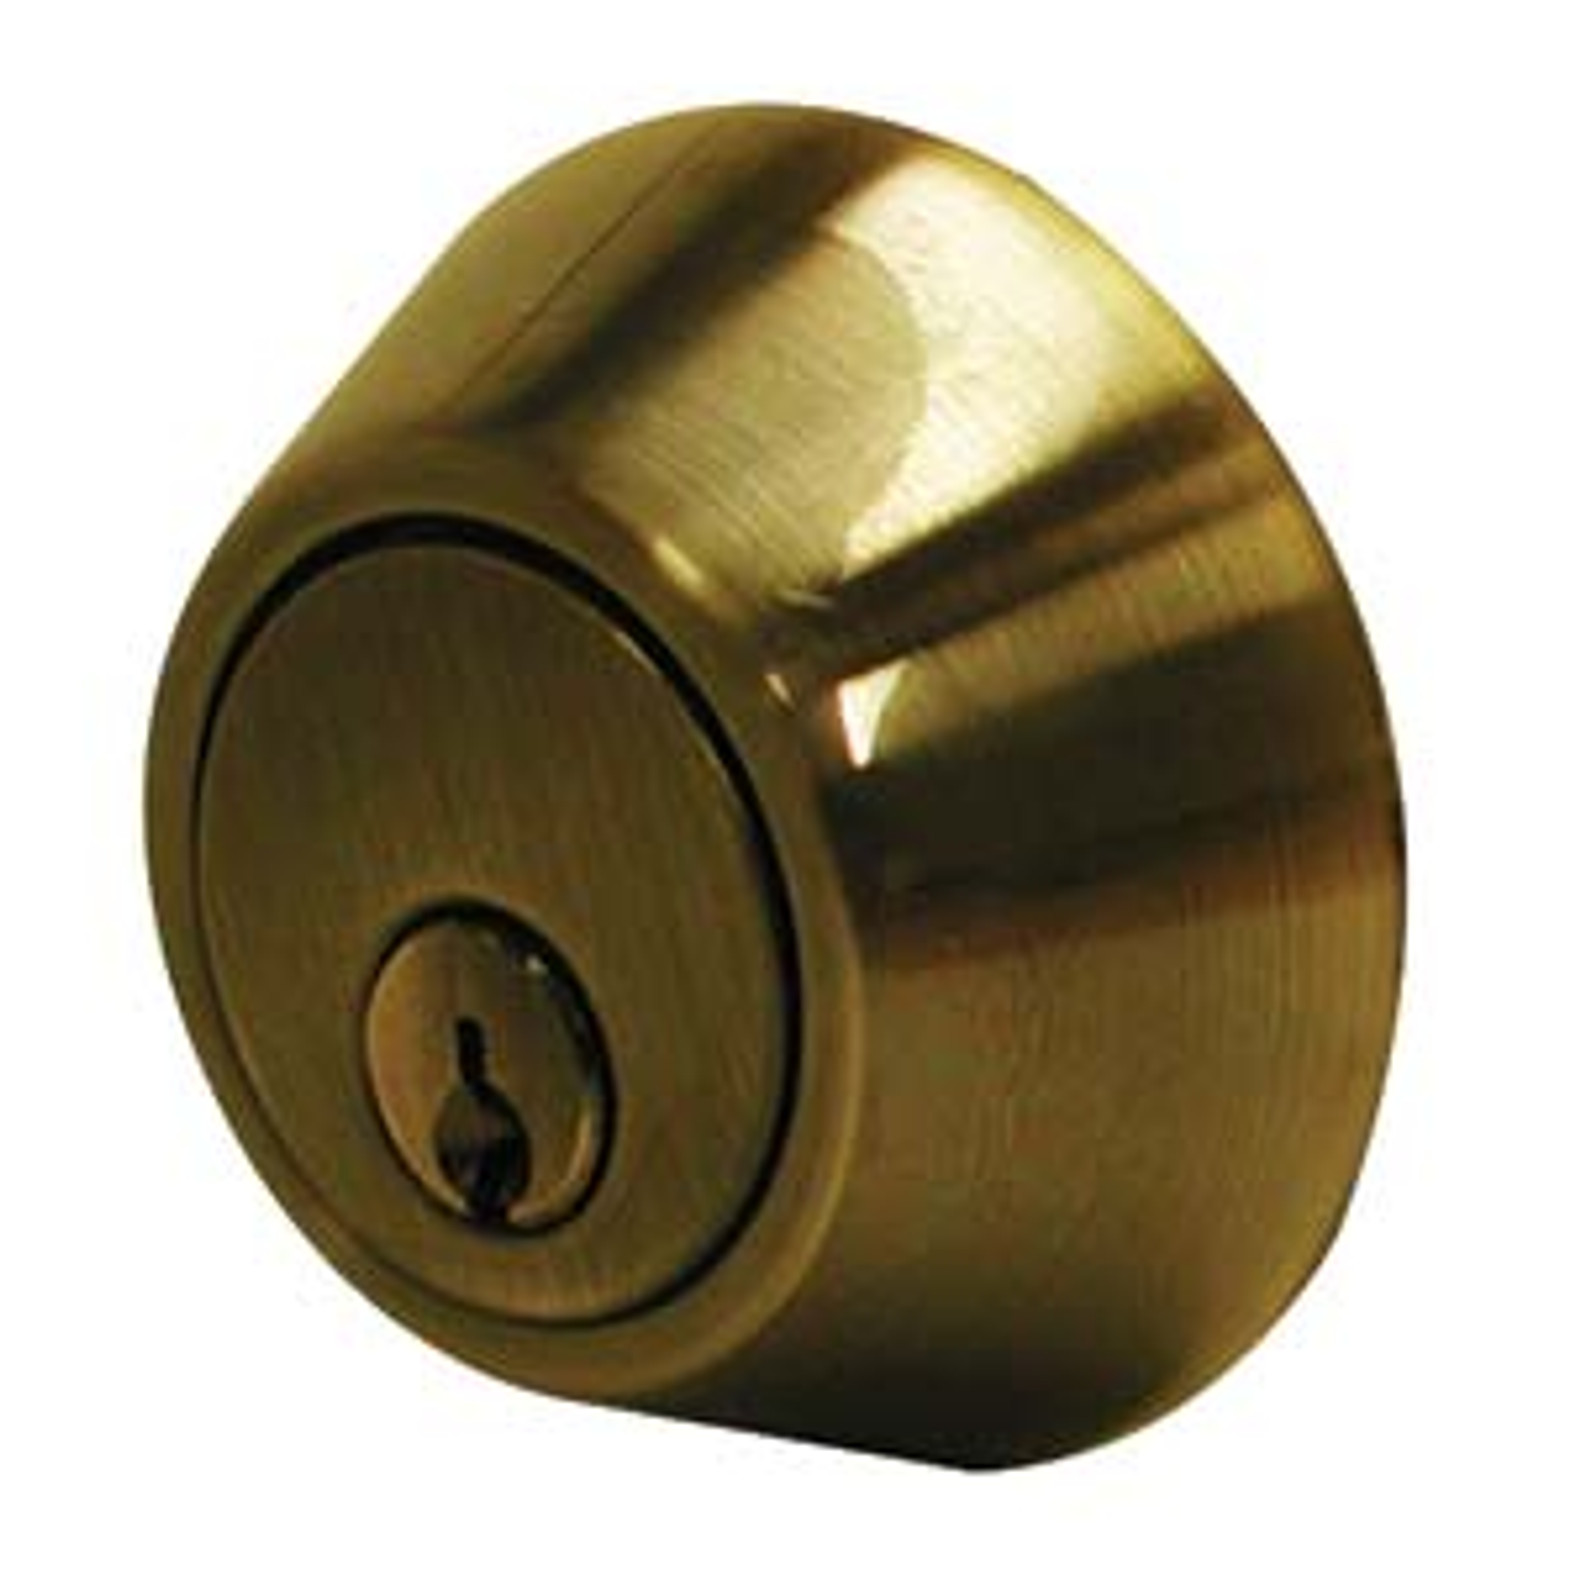 General Lock Single Cylinder Deadlock, US5 Antique Brass Finish